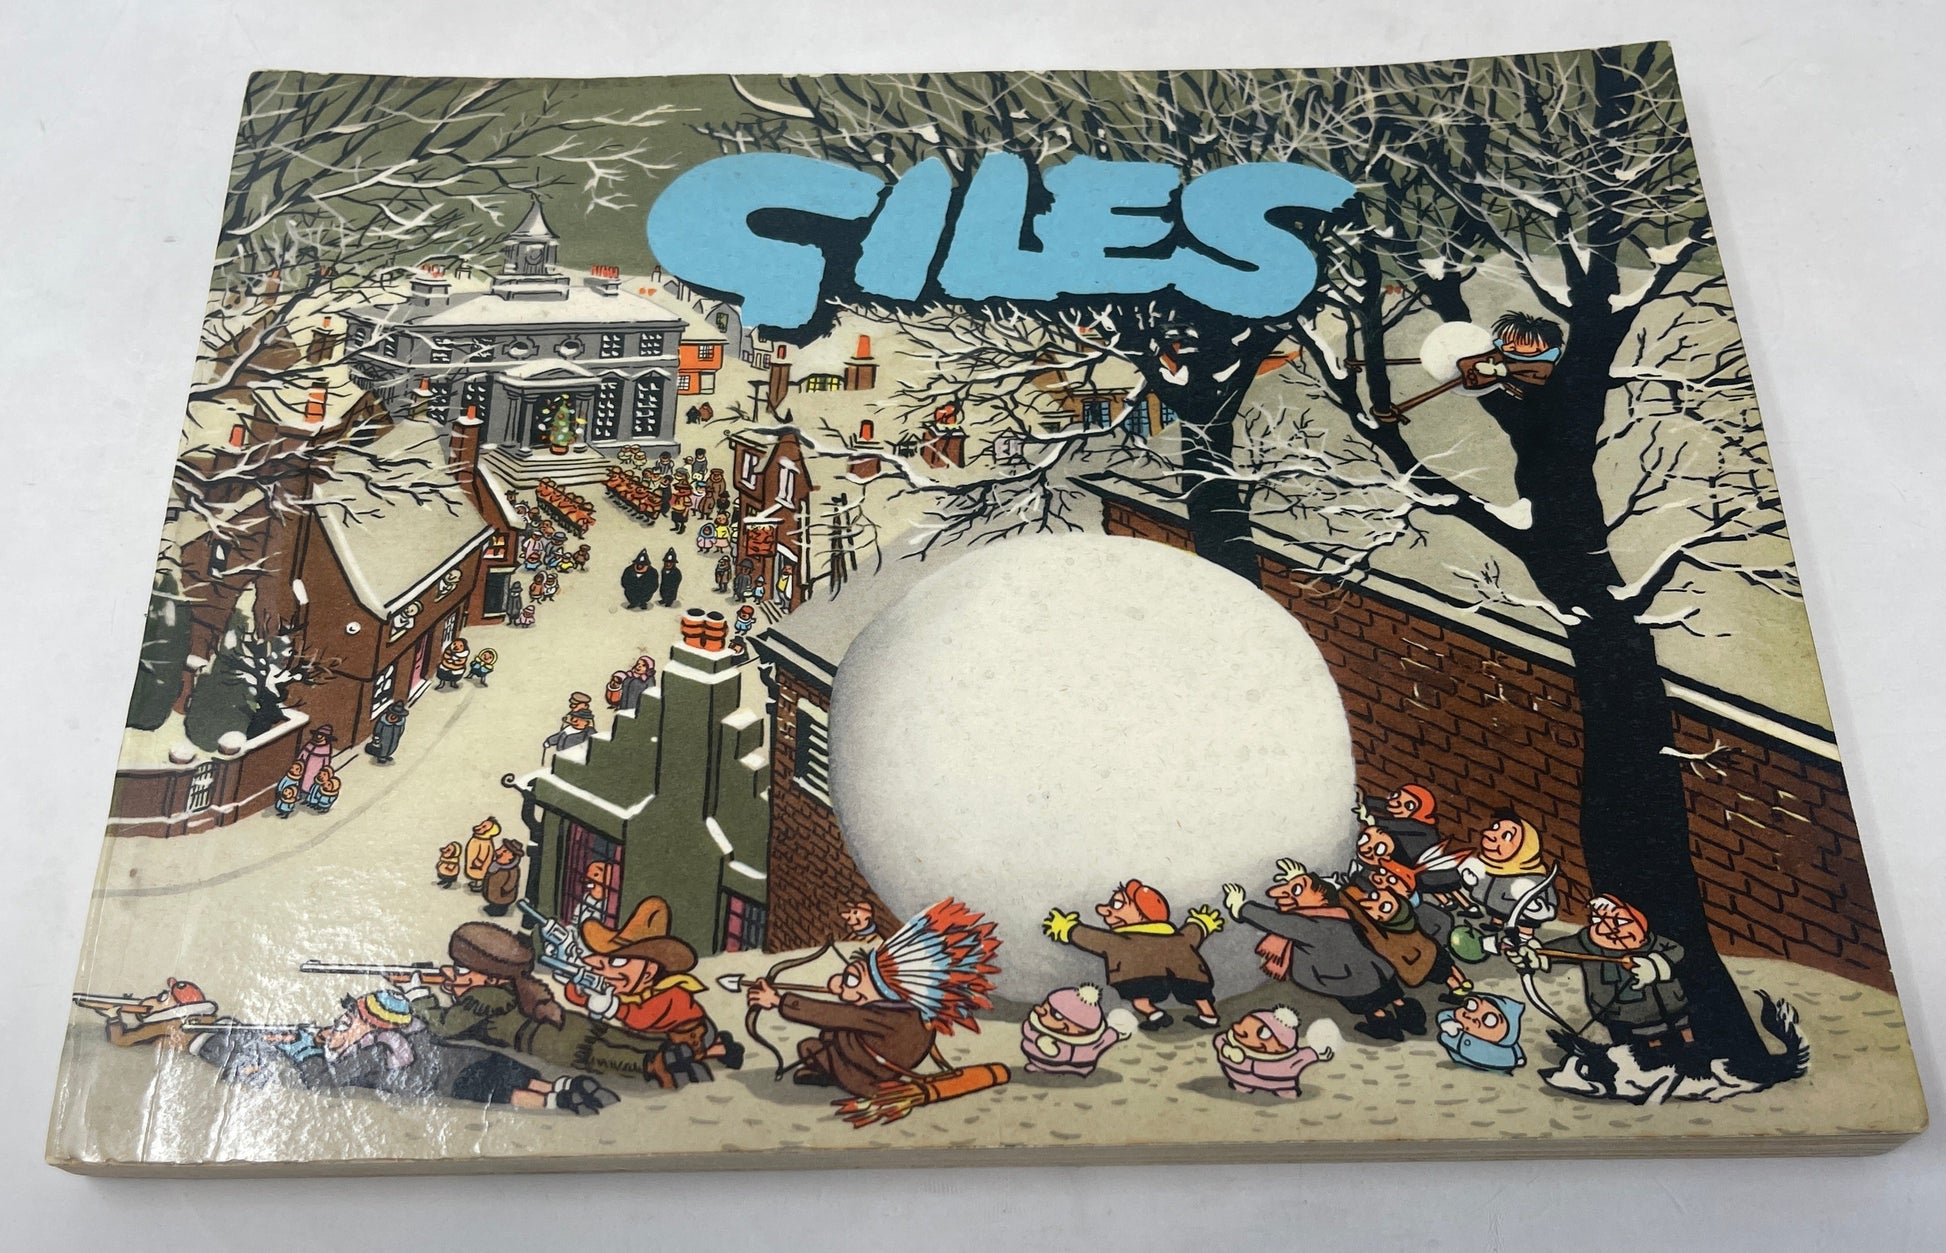 GILES Daily Express and Sunday Express Cartoons (11th Series)